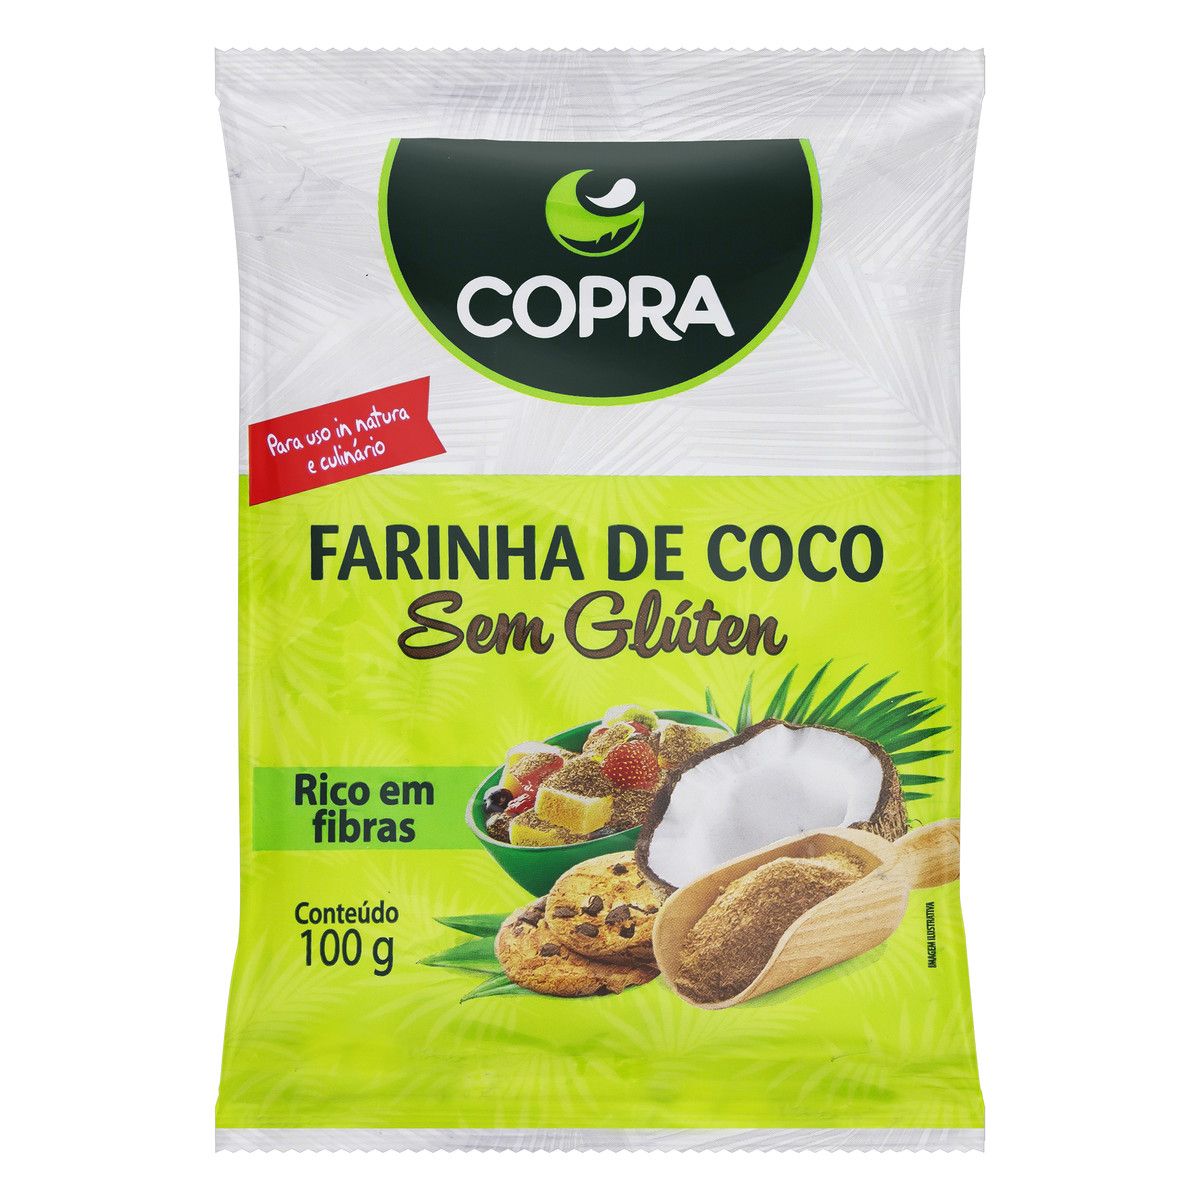 Farinha de Coco Copra Pacote 100g